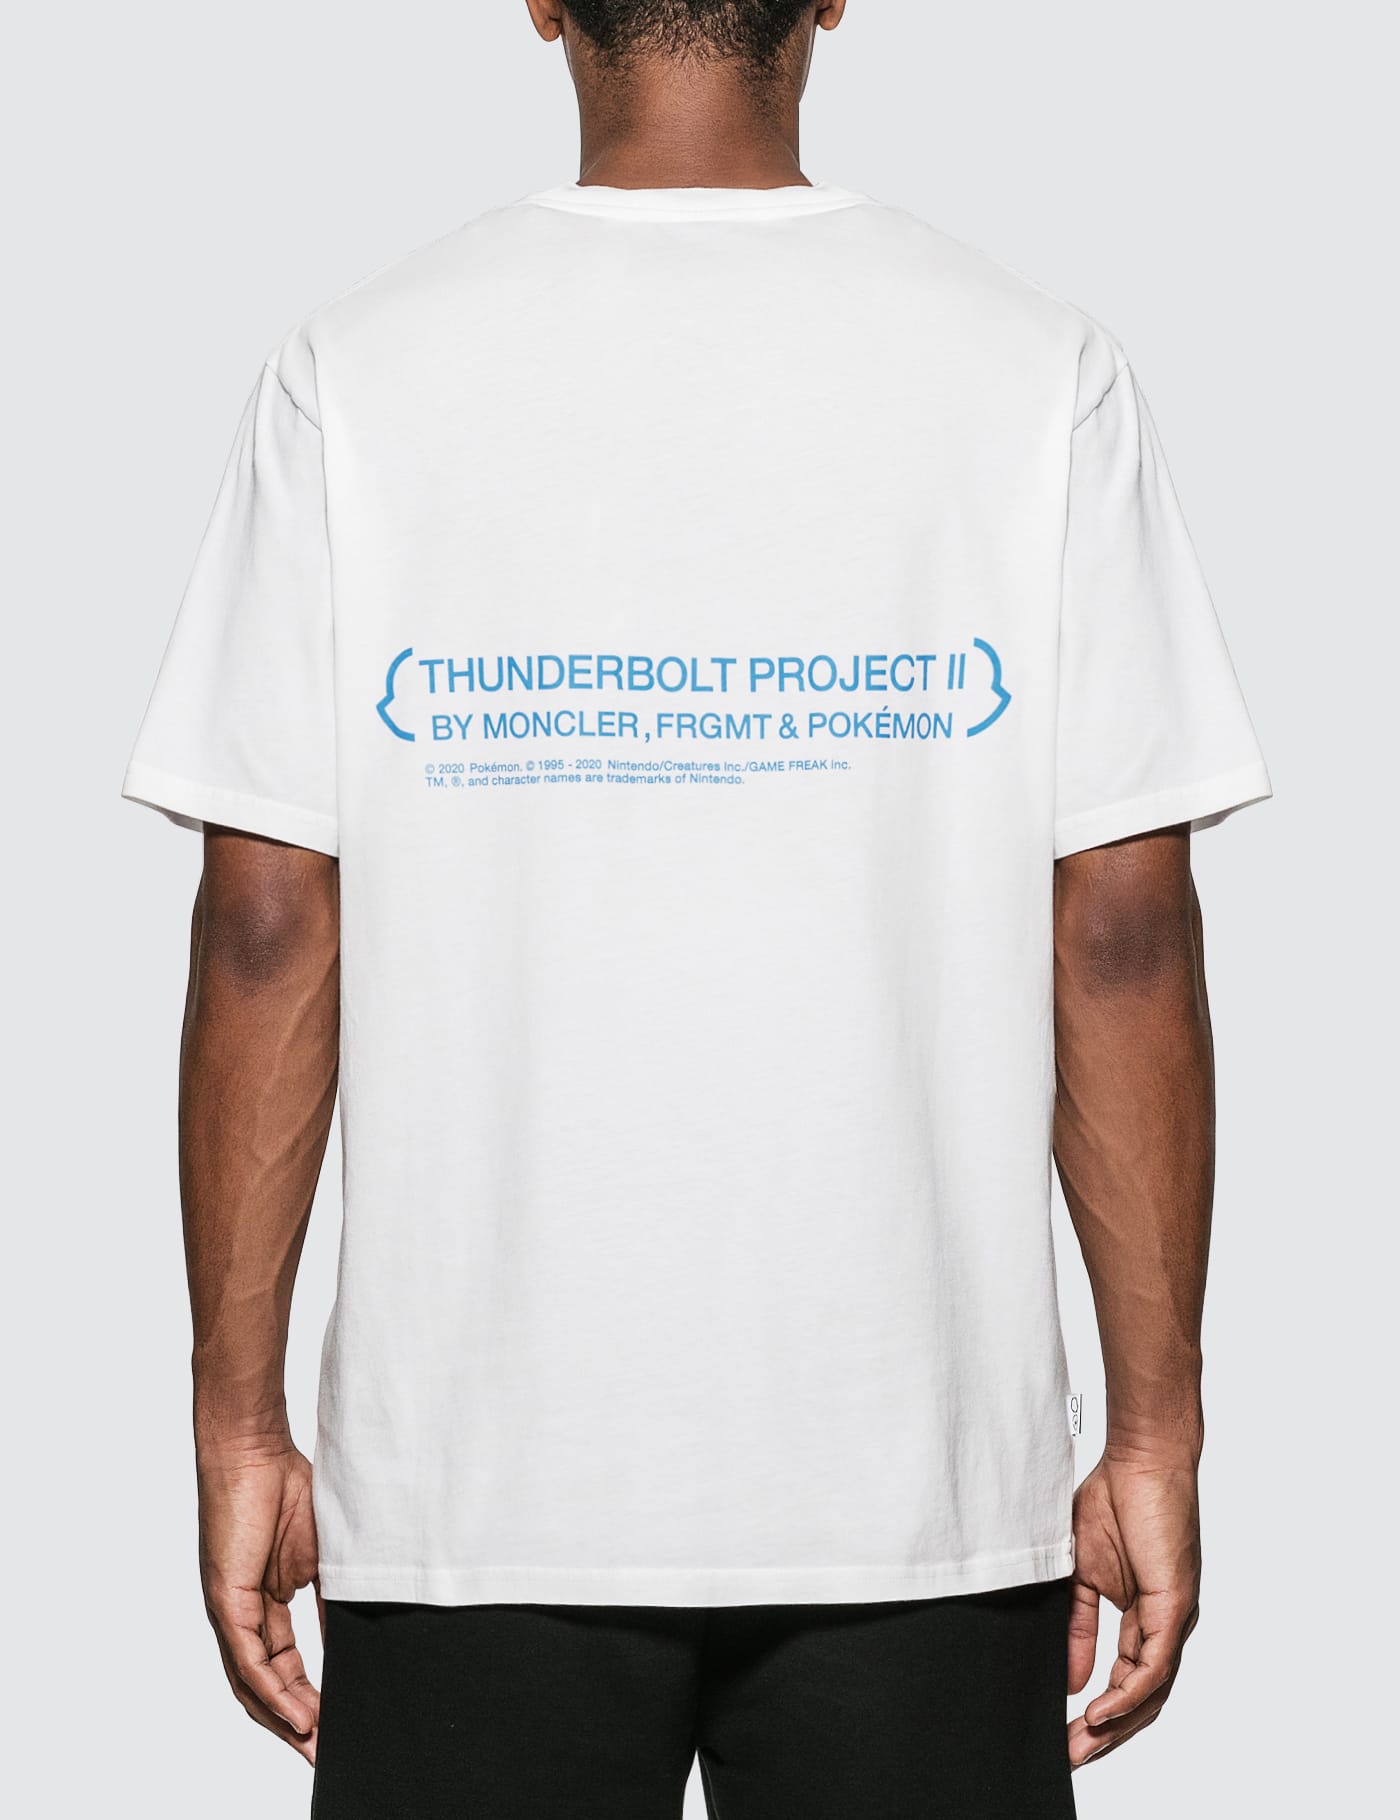 Moncler Genius - Moncler Genius x Fragment Design Mew T-Shirt 